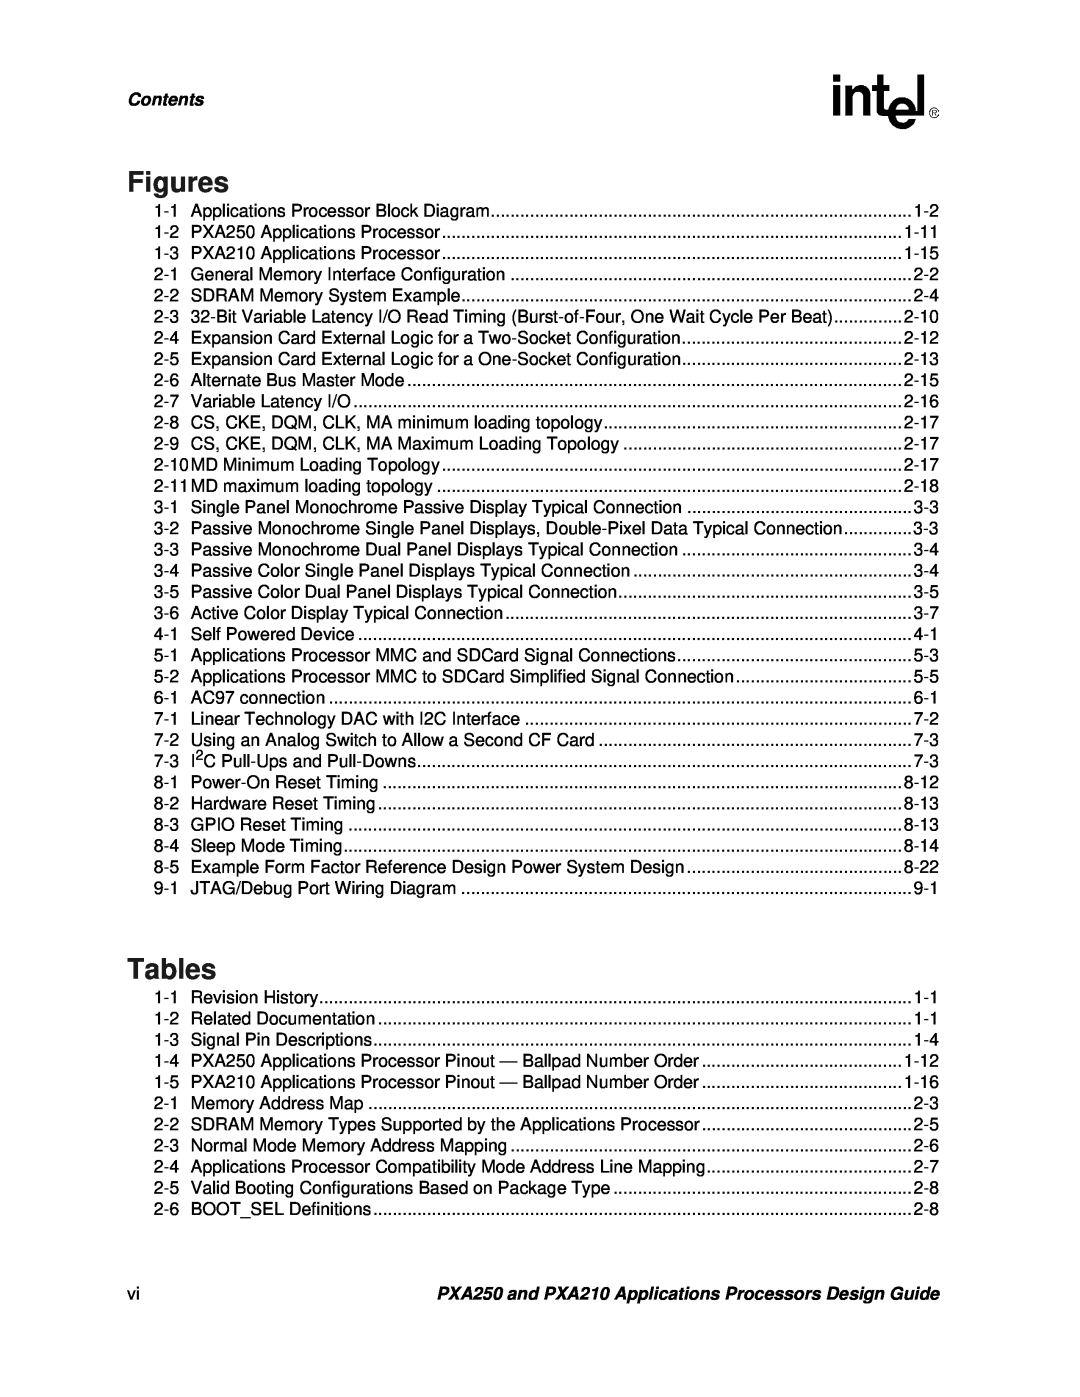 Intel manual Figures, Tables, Contents, PXA250 and PXA210 Applications Processors Design Guide 